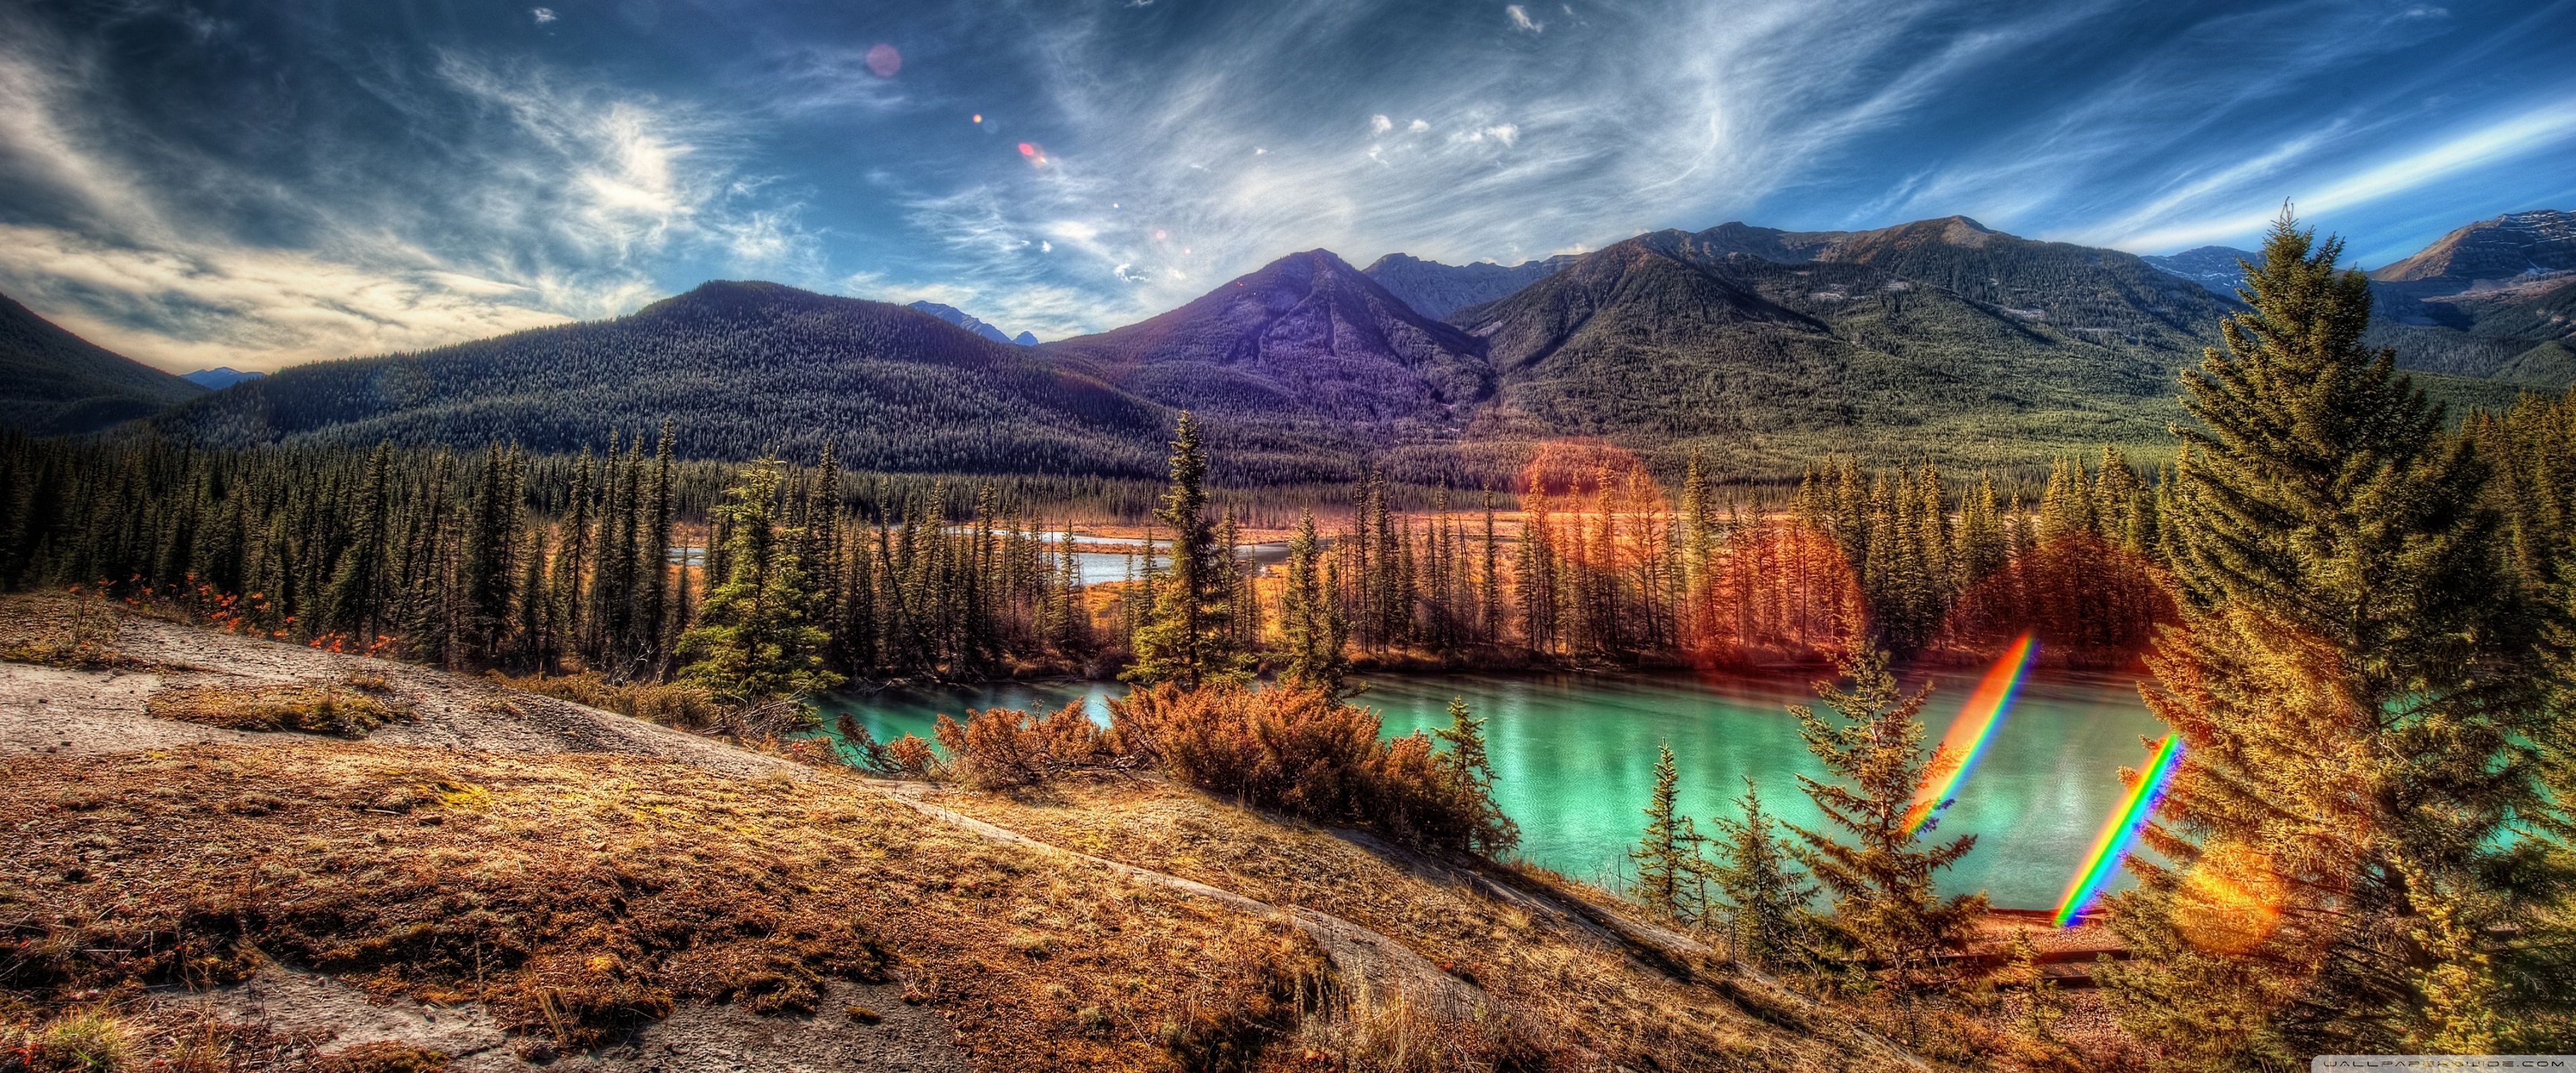 Banff National Park, Alberta, Canada ❤ 4K HD Desktop Wallpapers for